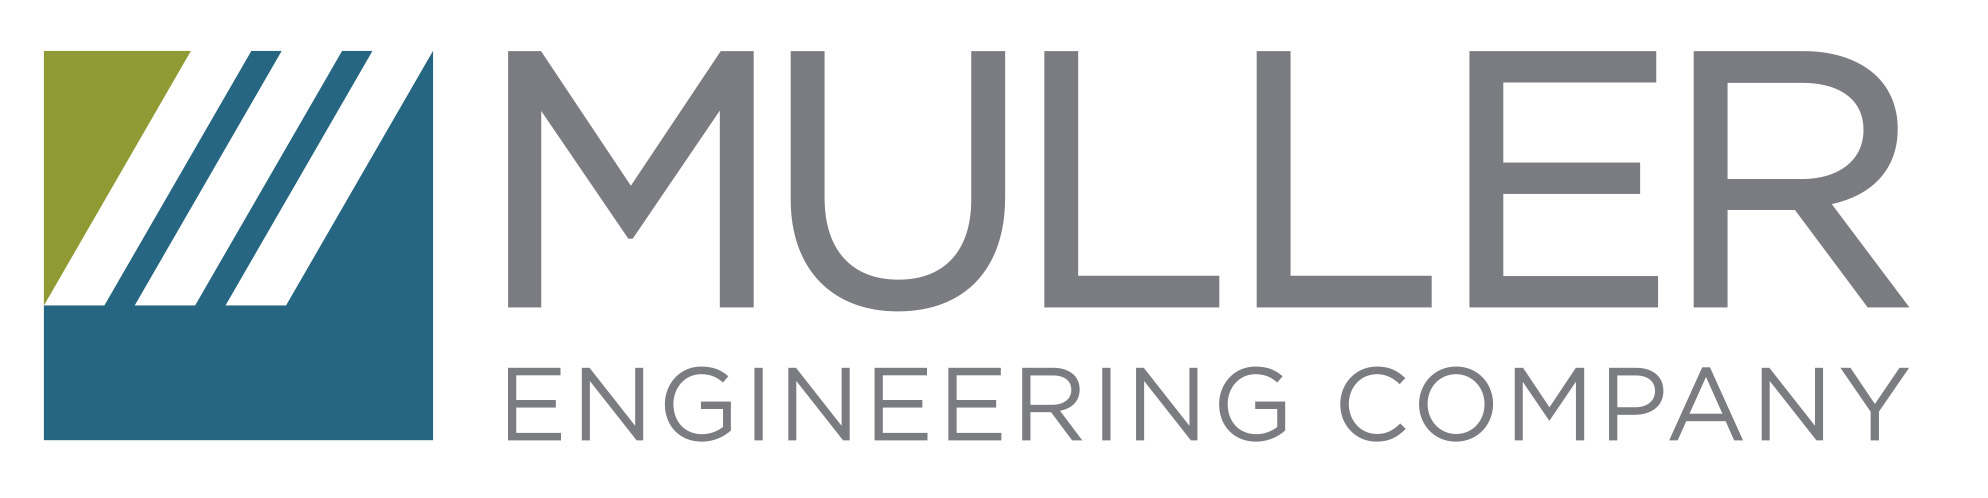 Muller Engineering Company, Inc. logo